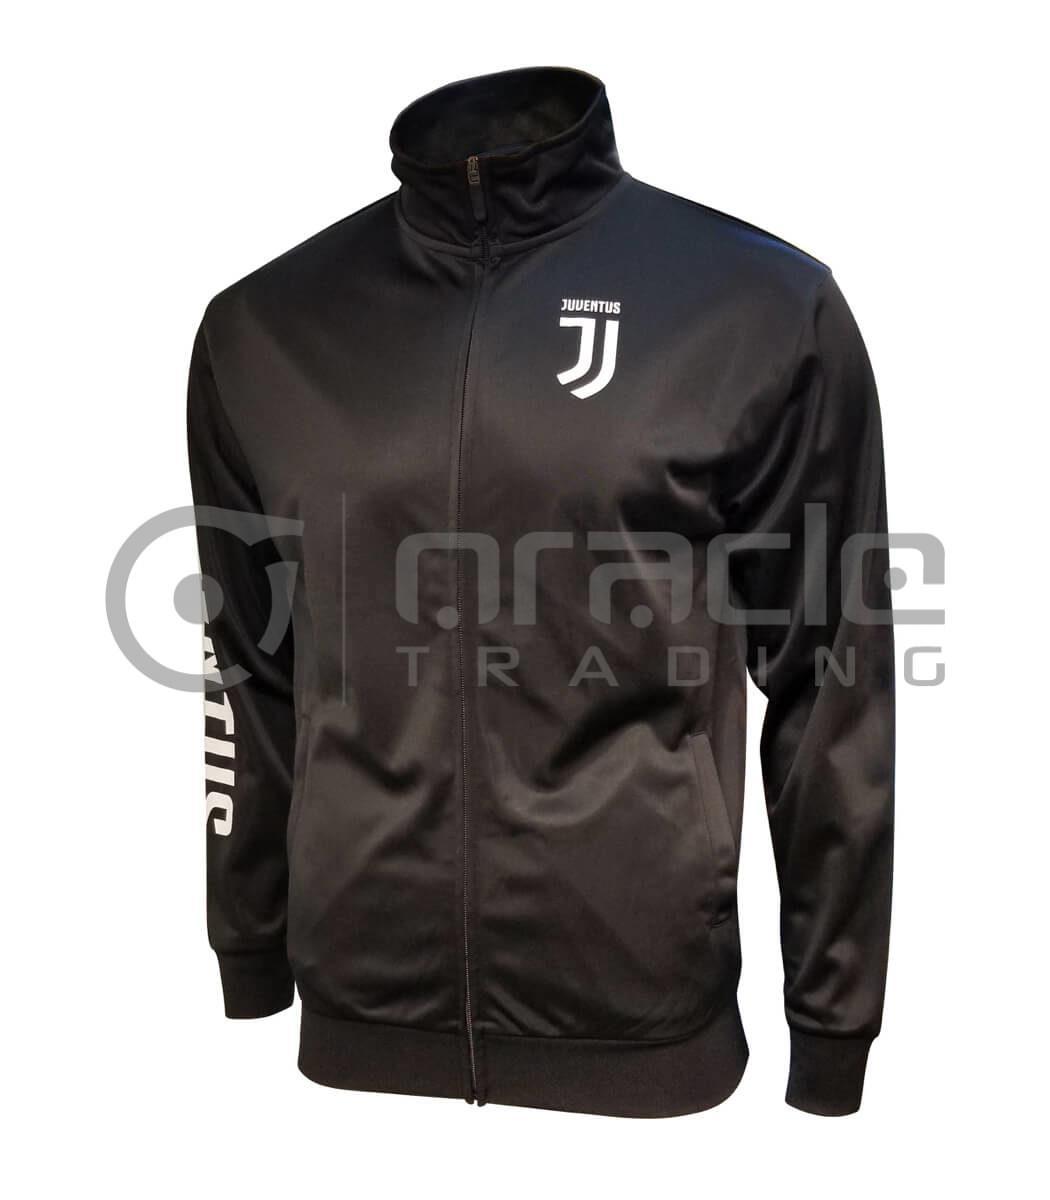 Juventus Track Jacket (Adult)